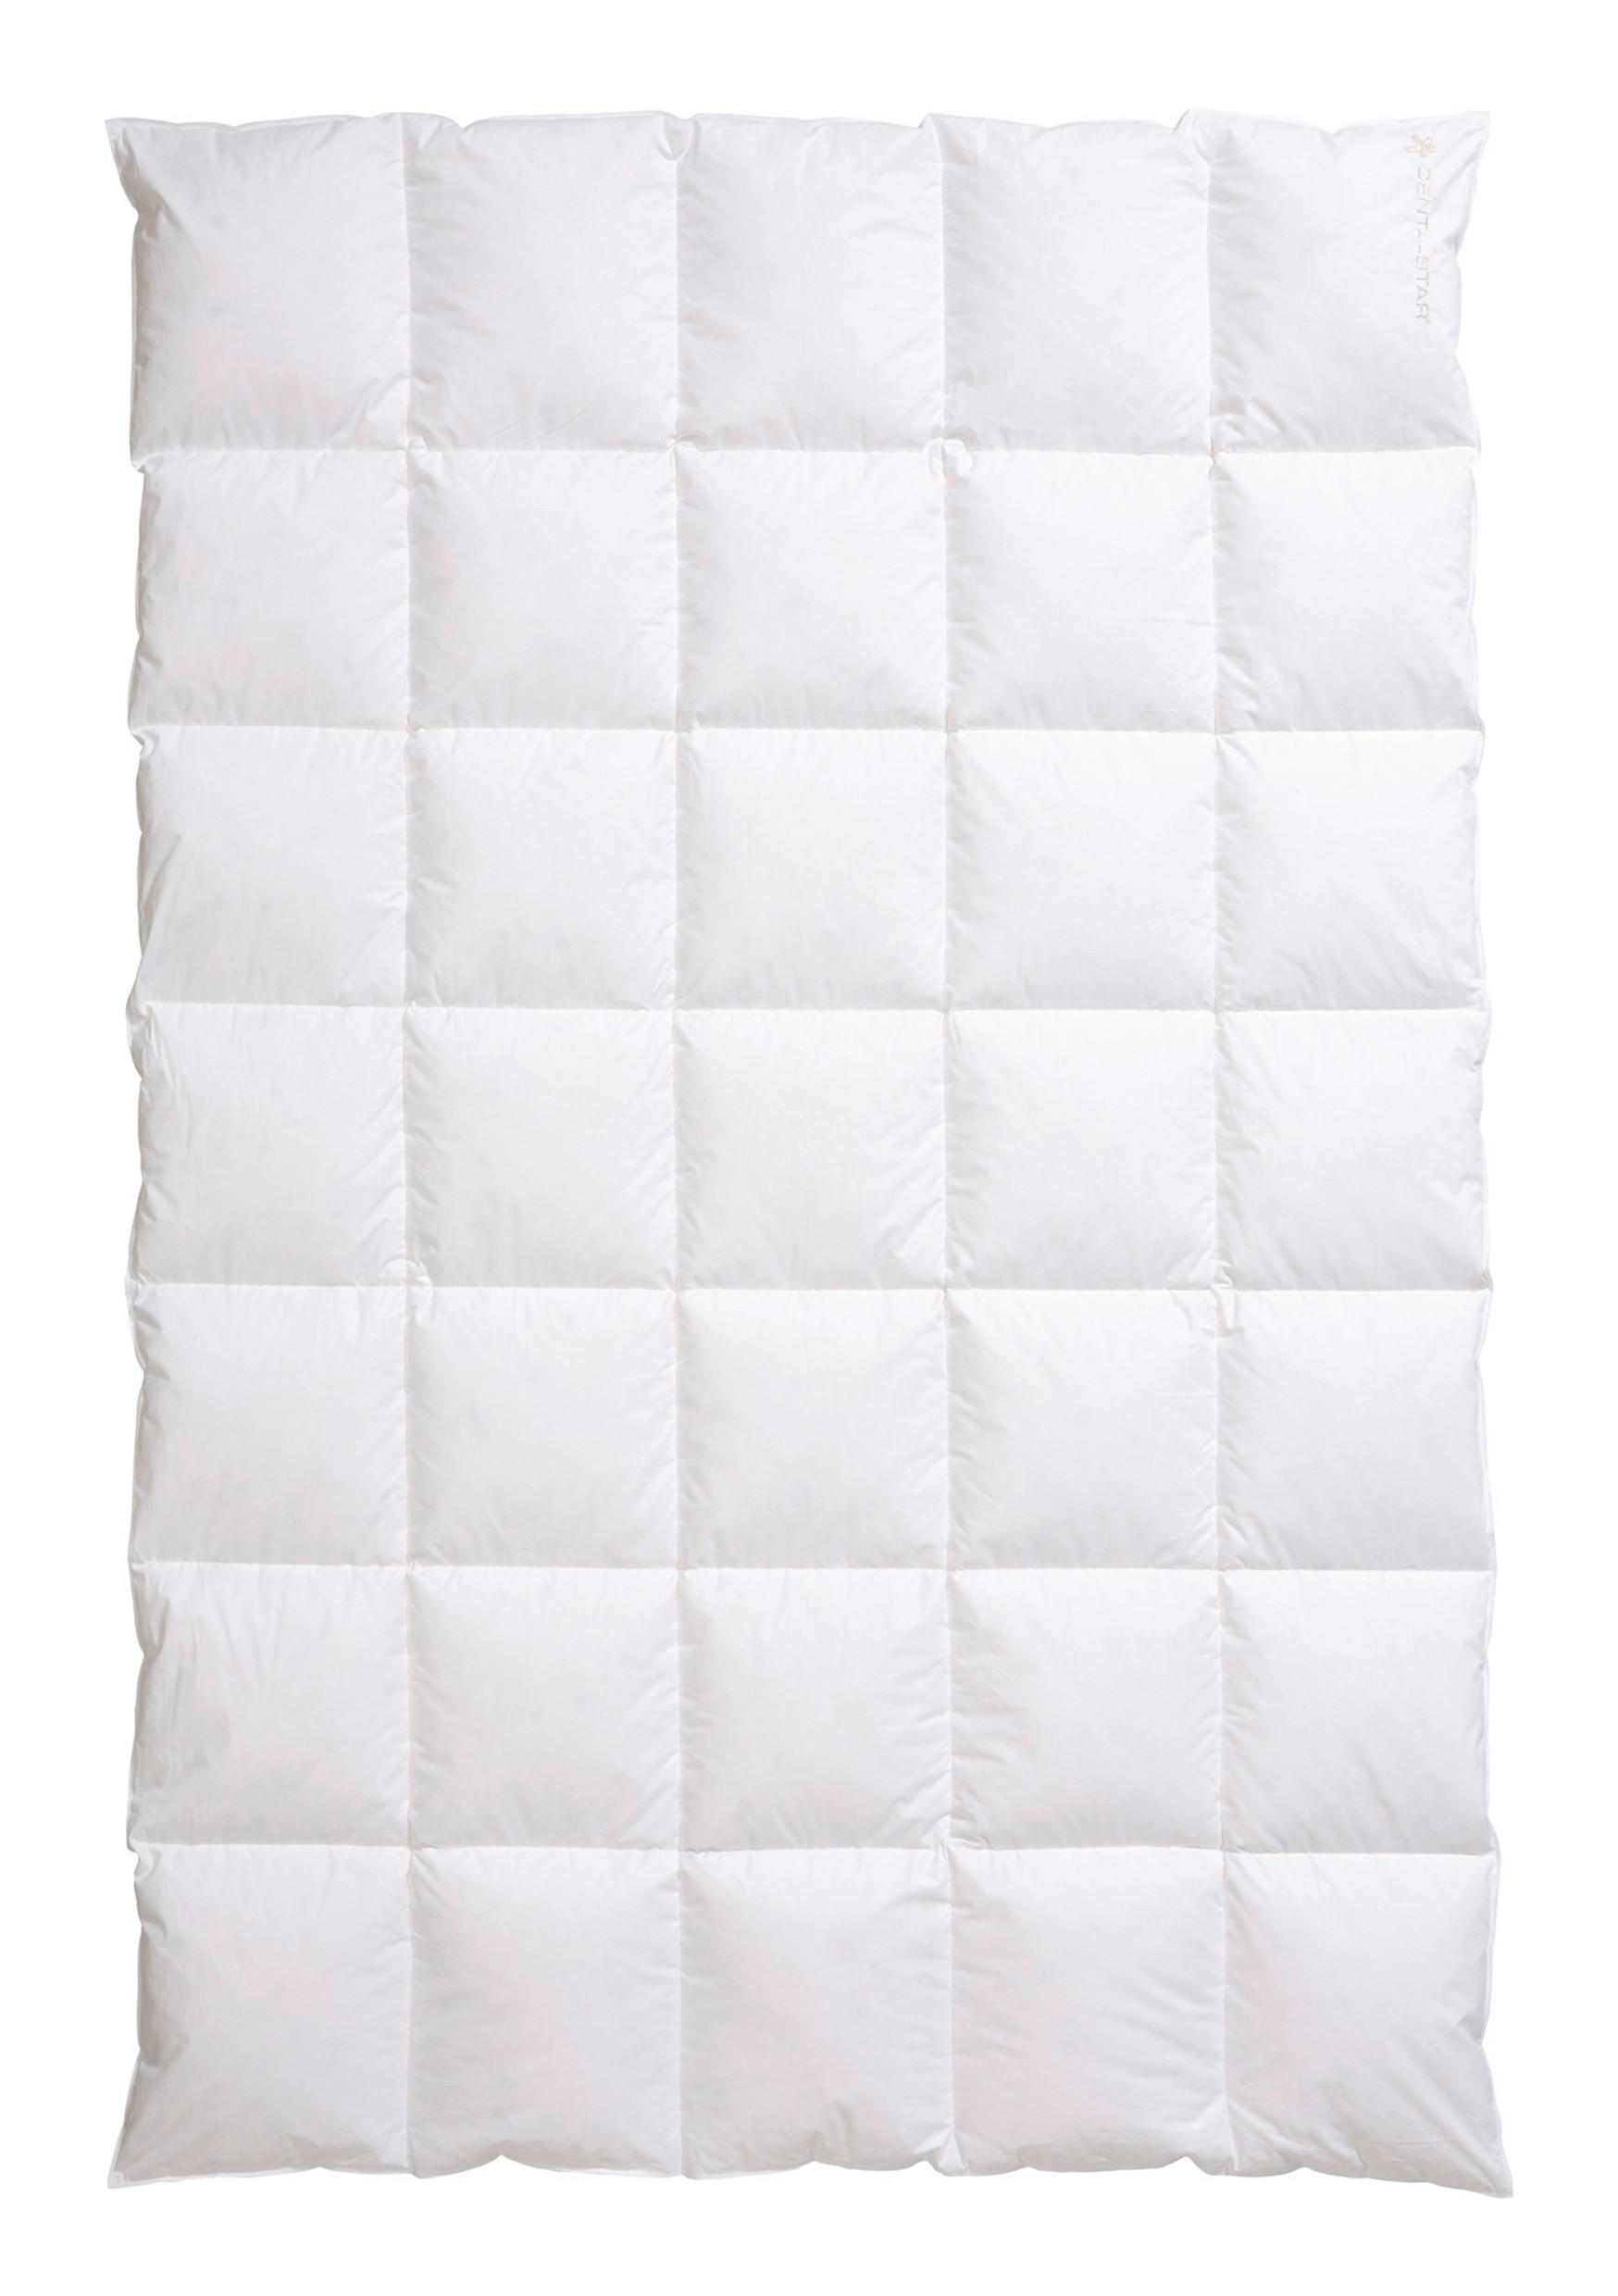 GANZJAHRESBETT  Harmony  240/220 cm   - Weiß, Basics, Textil (240/220cm) - Centa-Star